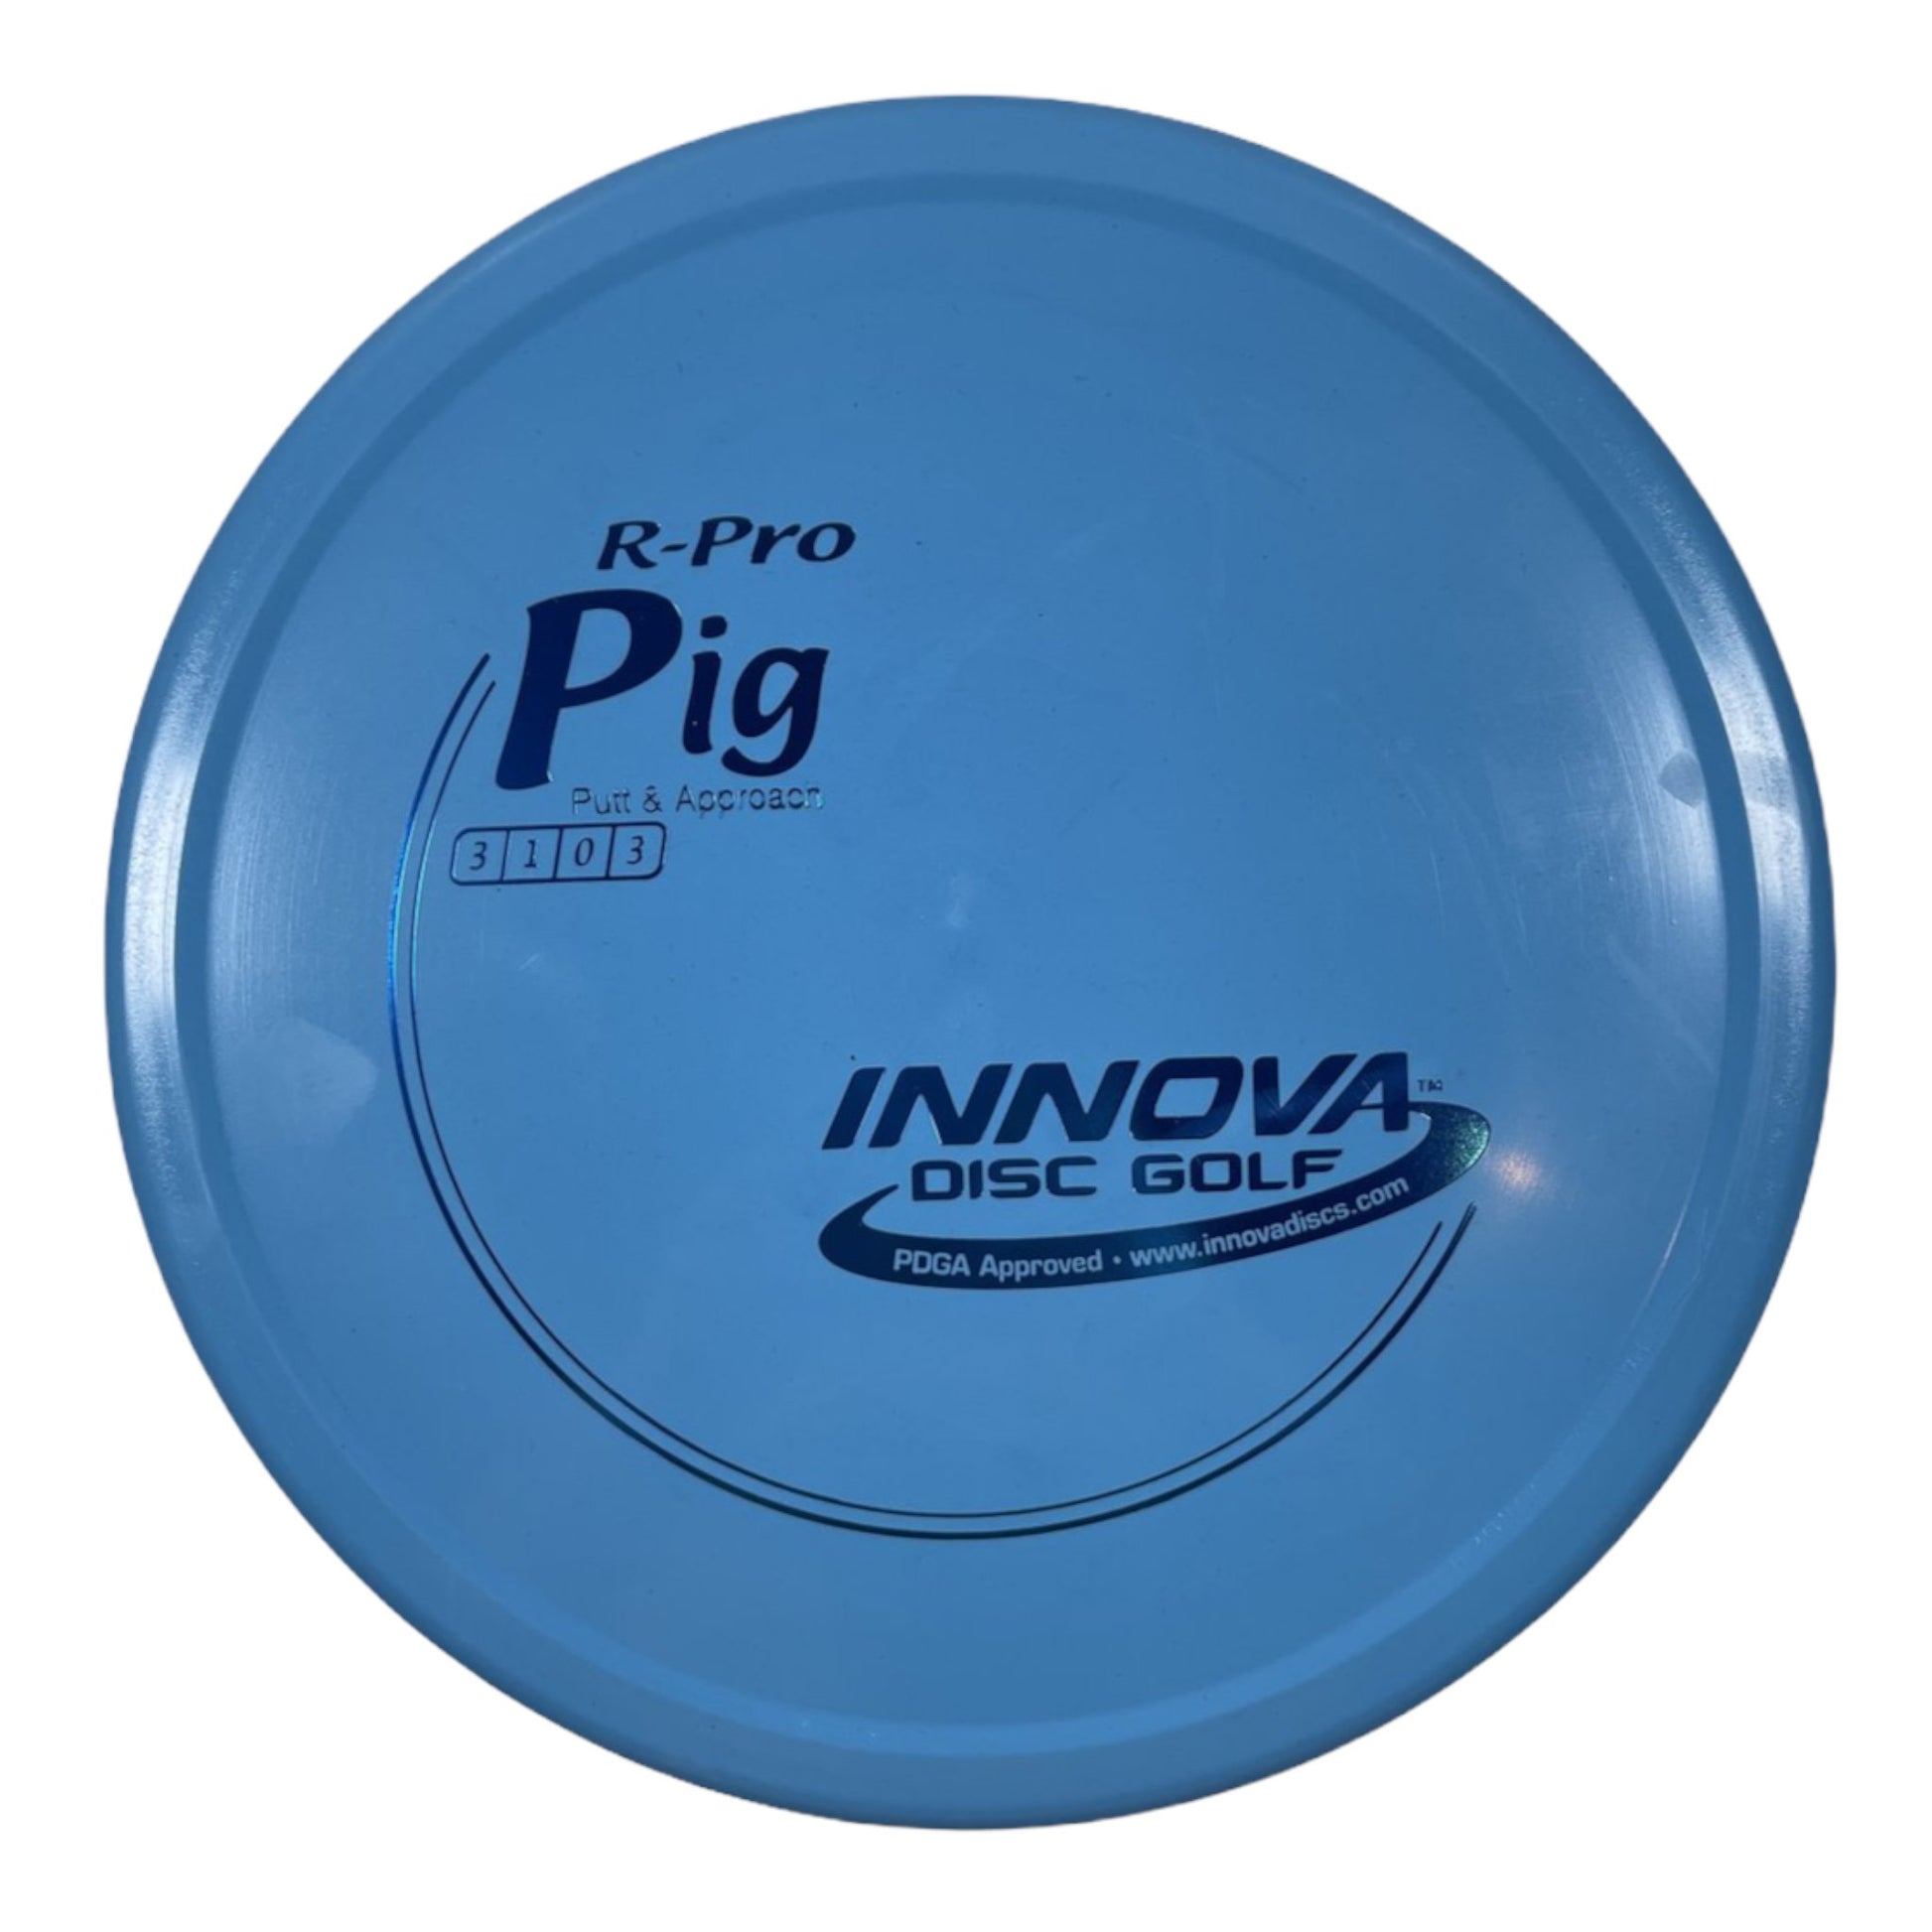 Innova Champion Discs Pig | R-Pro | Blue/Blue 170g Disc Golf